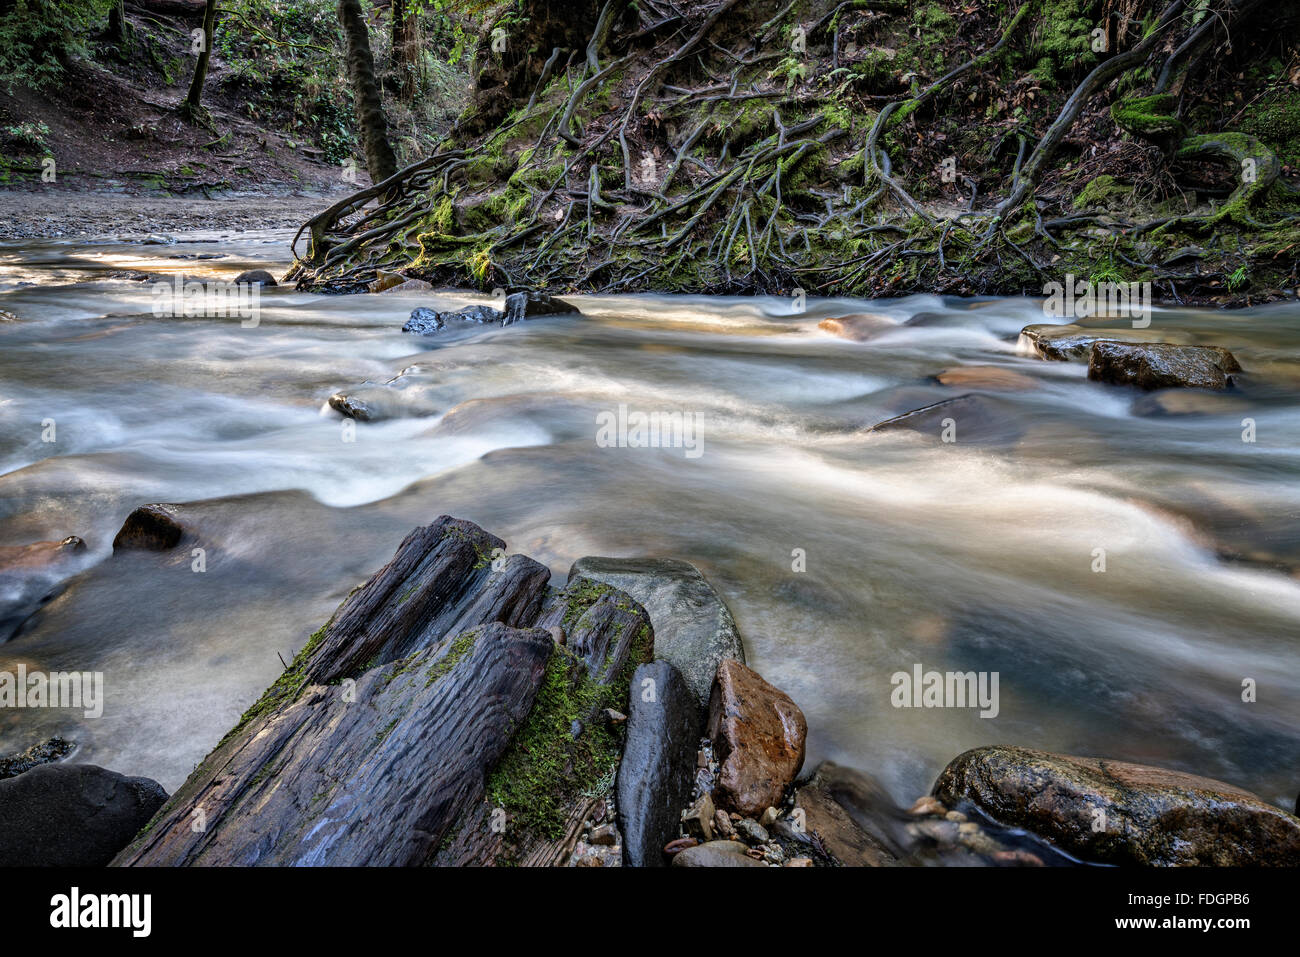 Rushing forest stream Stock Photo